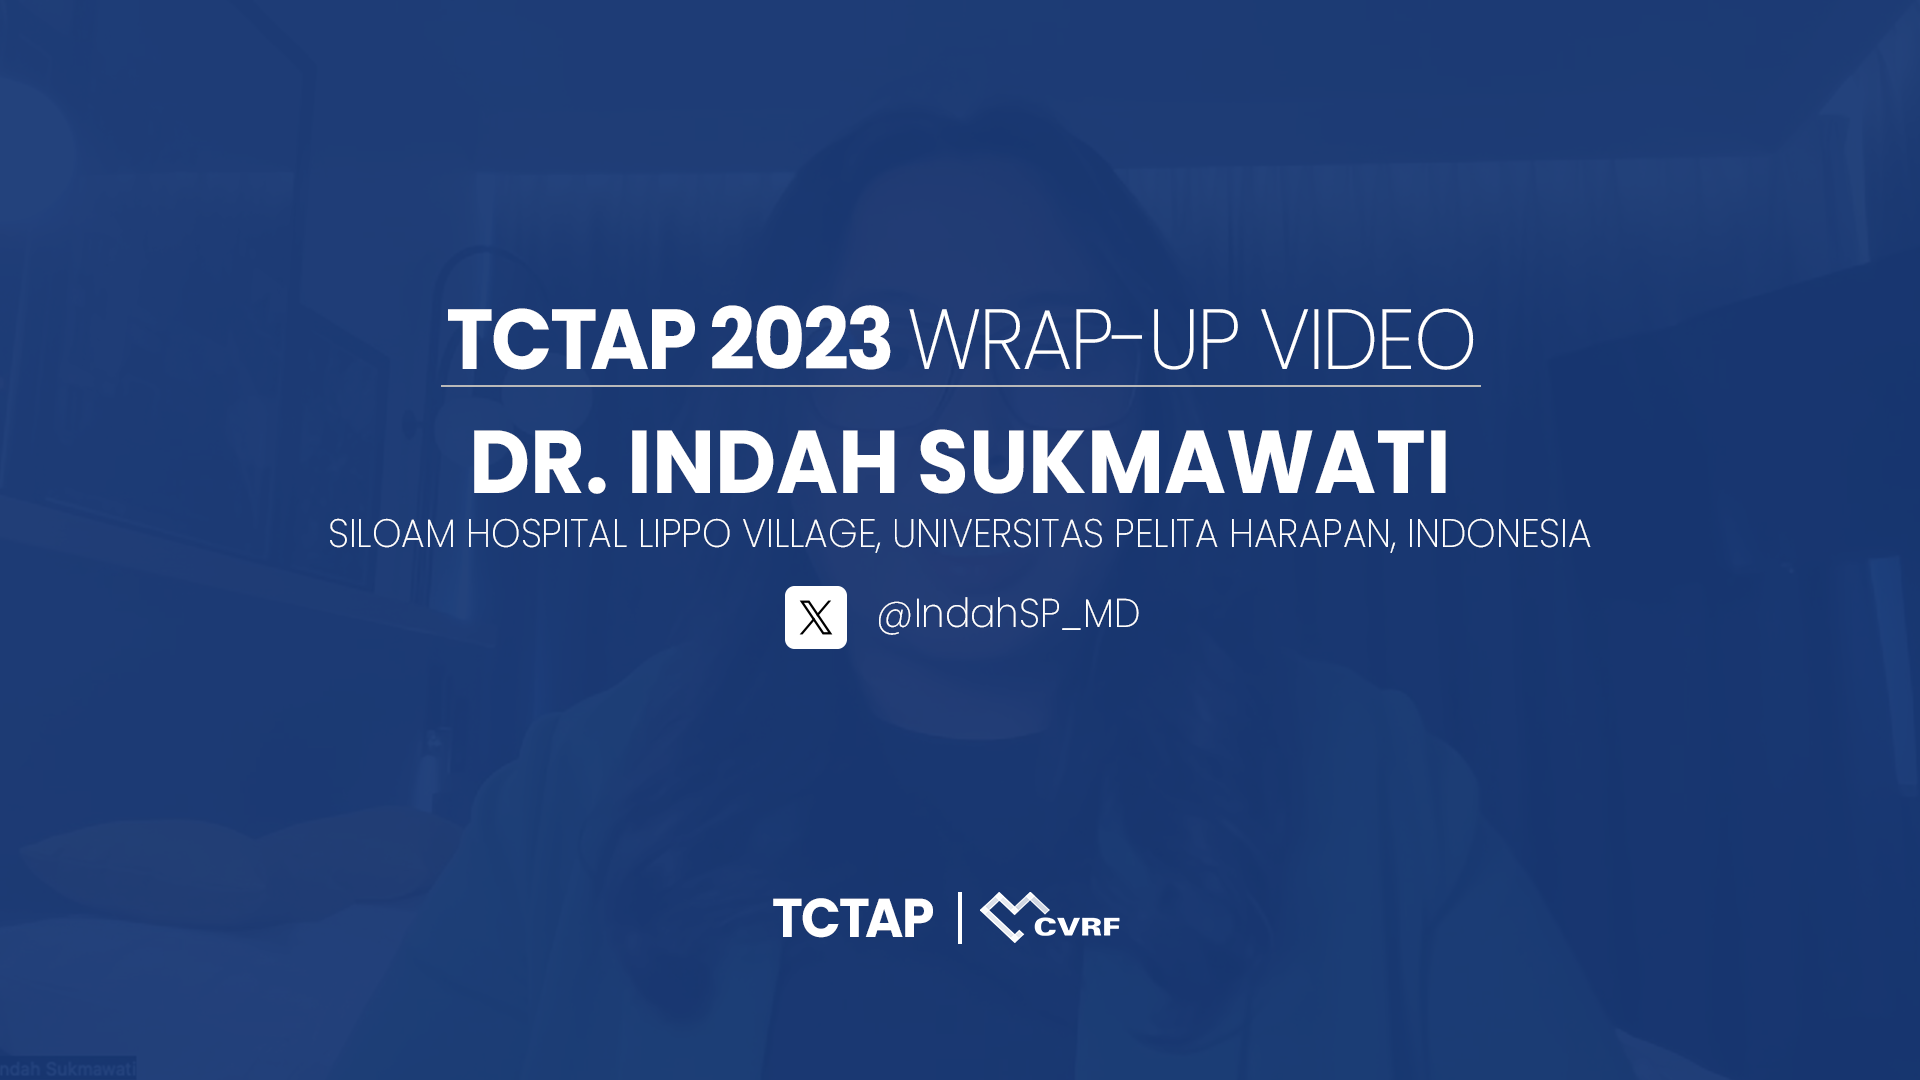 TCTAP 2023 Wrap-up Video from Dr. Indah Sukmawati